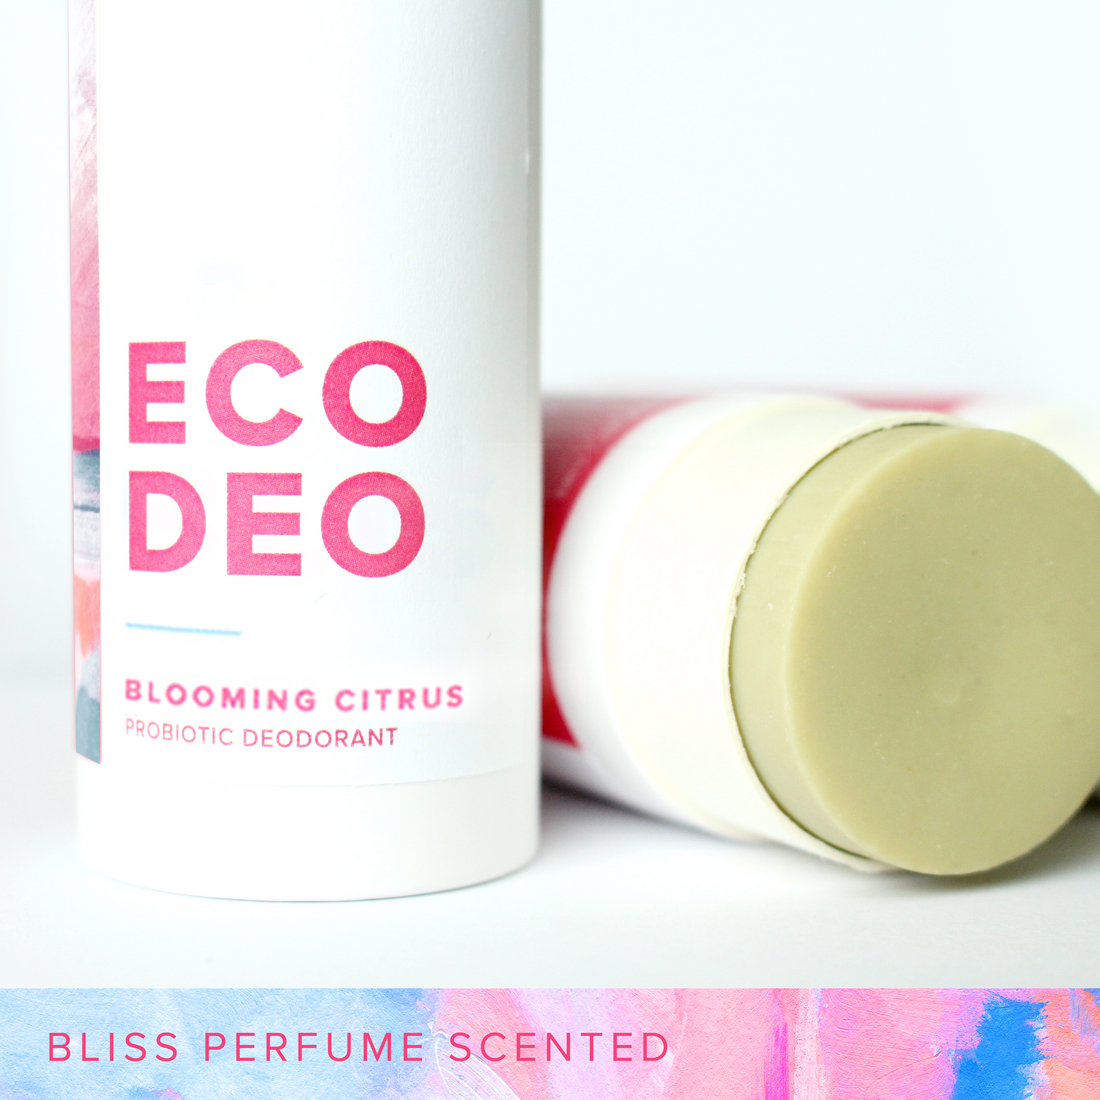 Bliss Eco Deo Probiotic Deodorant